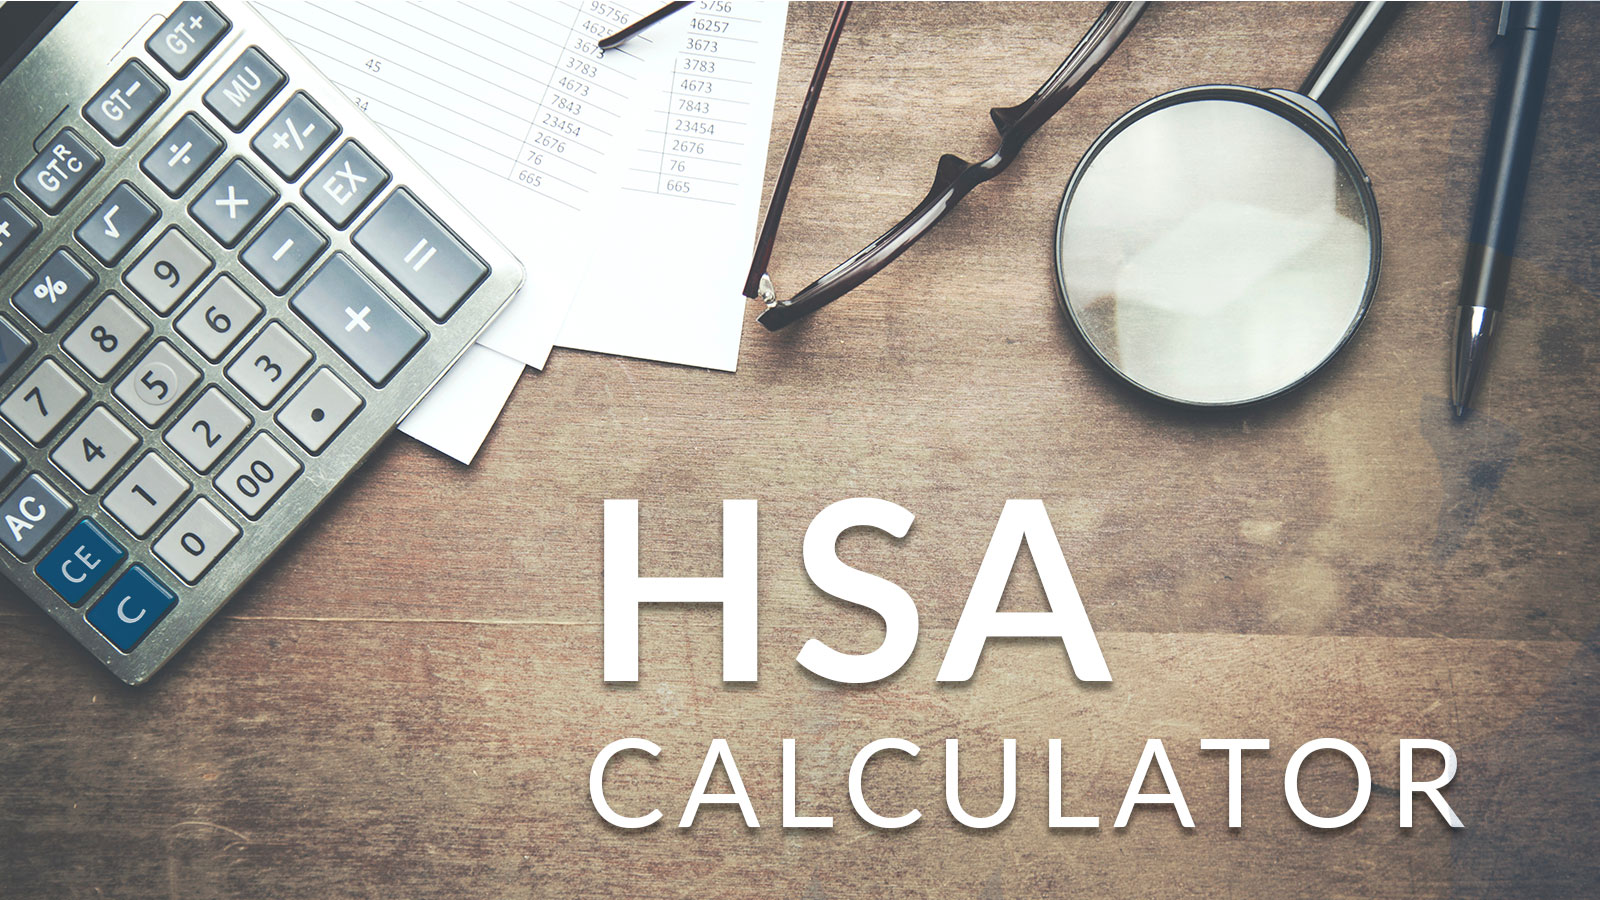 HSA Calculator